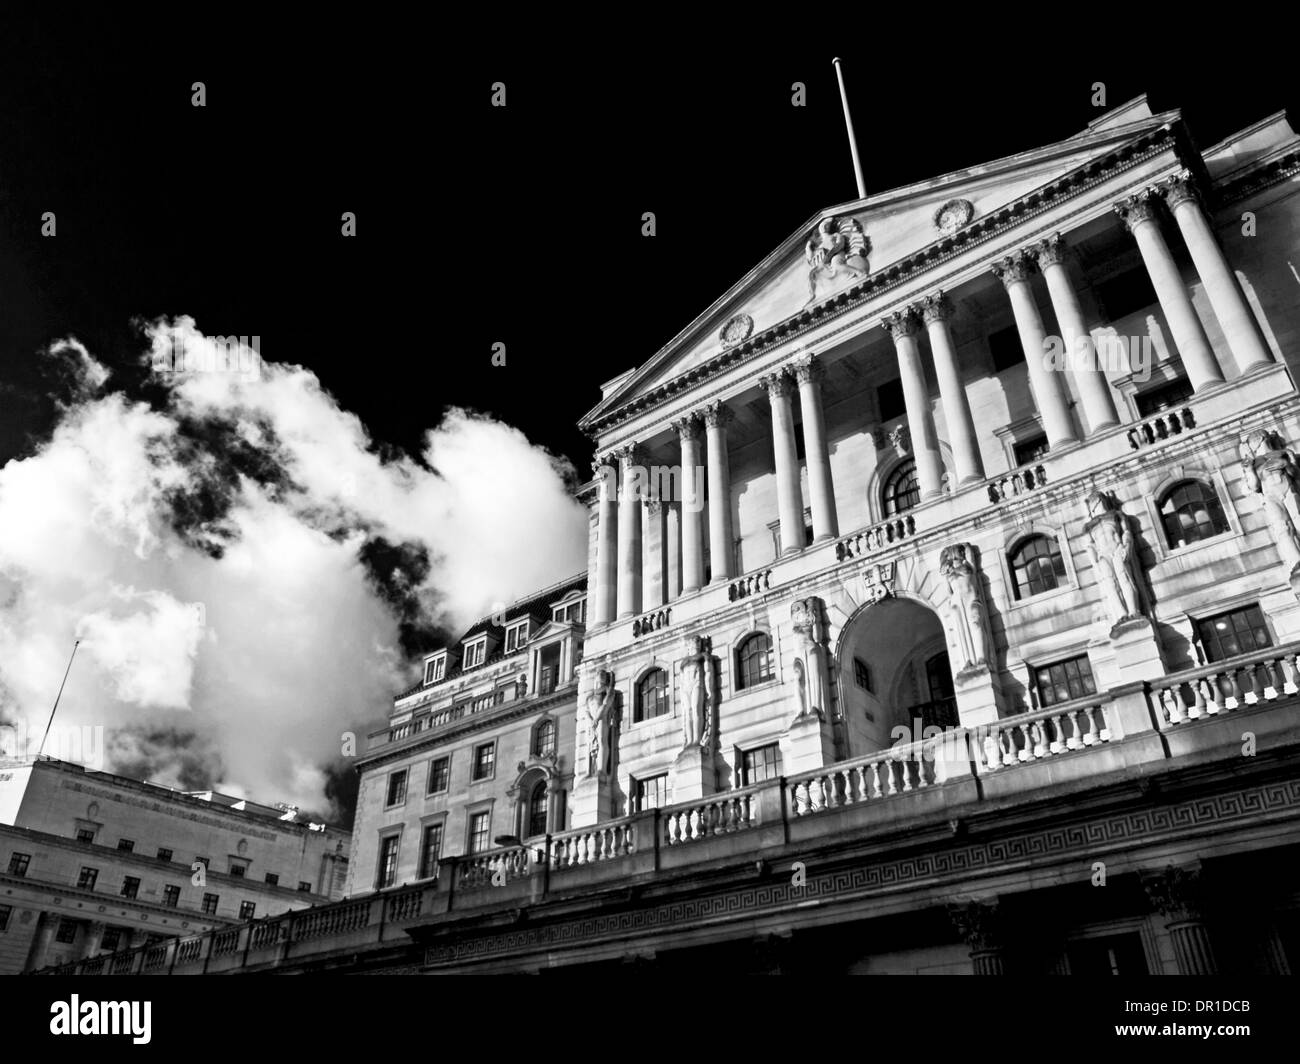 Siège de la Banque d'Angleterre, Threadneedle Street, City of London, Londres, Angleterre, Royaume-Uni Banque D'Images